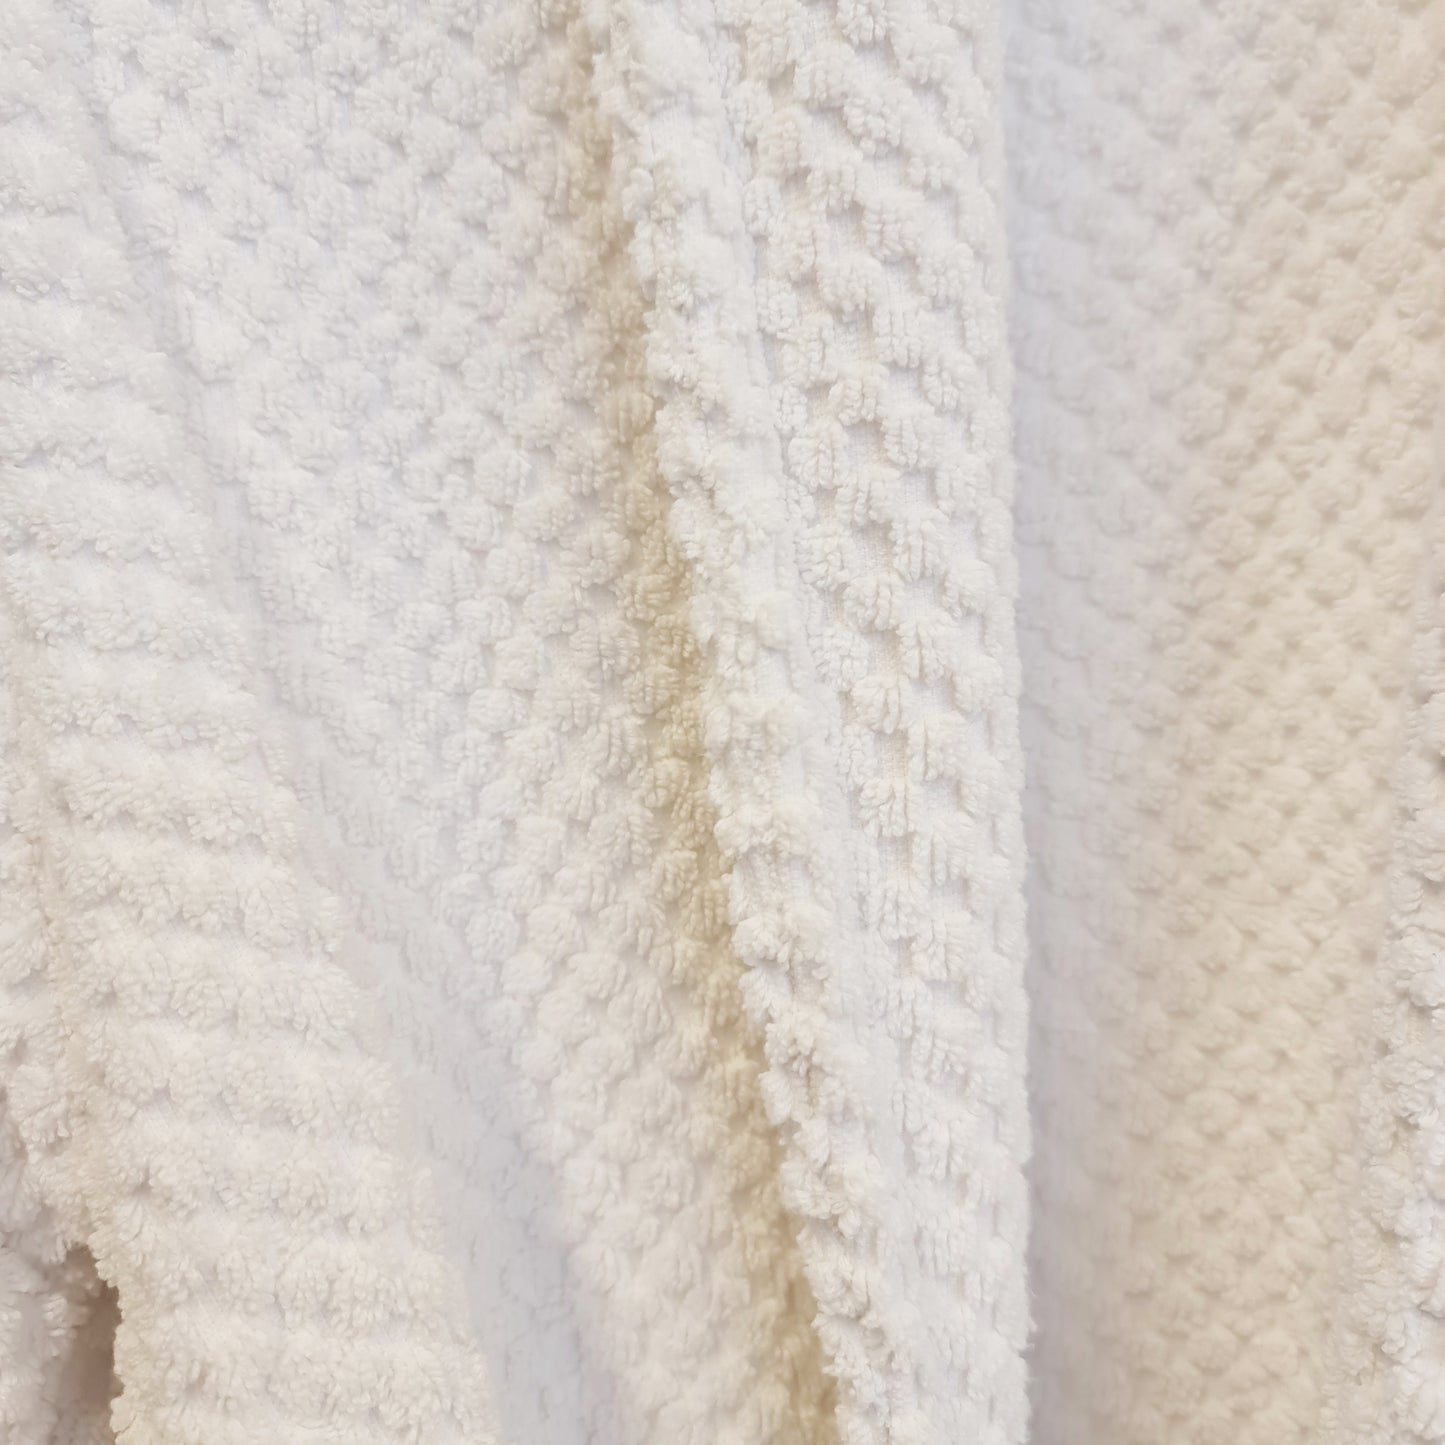 Turkish Terry Towel Bathrobe White Dotted Pompom Design